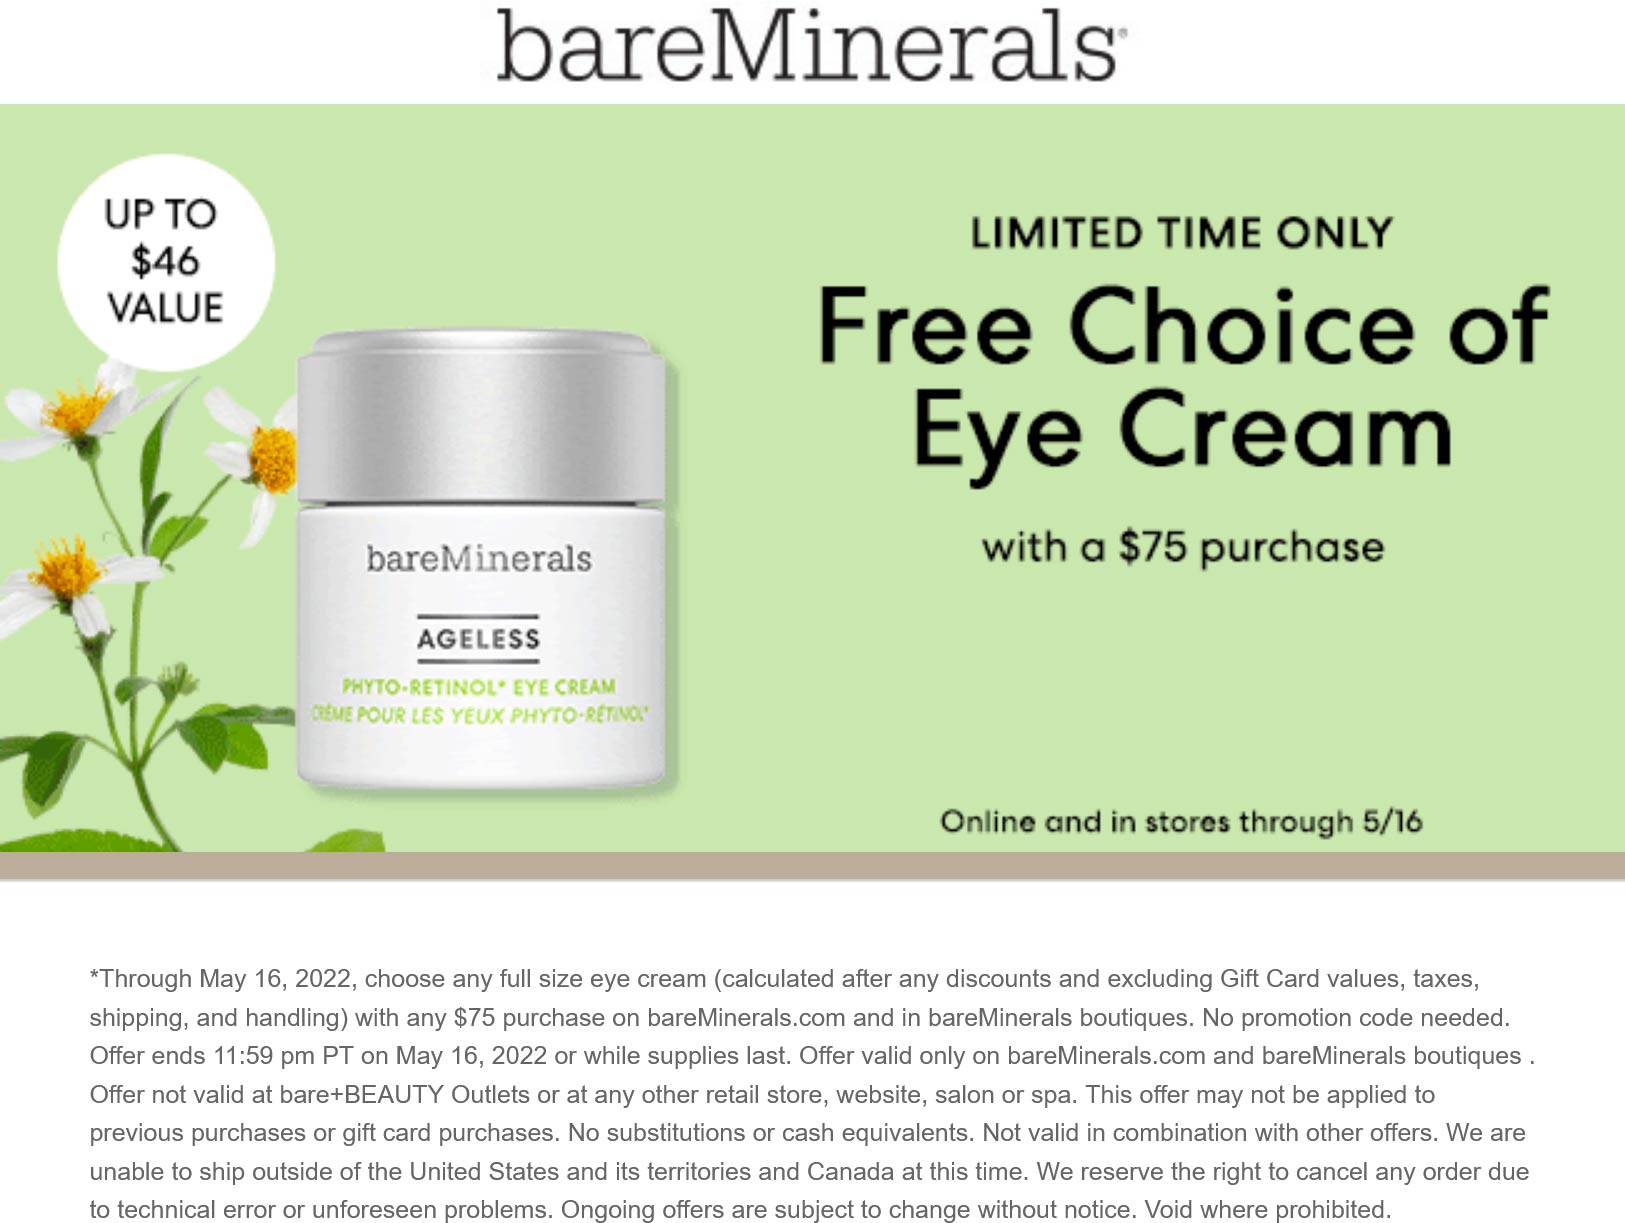 bareMinerals restaurants Coupon  Free eye cream on $75 at bareMinerals, ditto online #bareminerals 